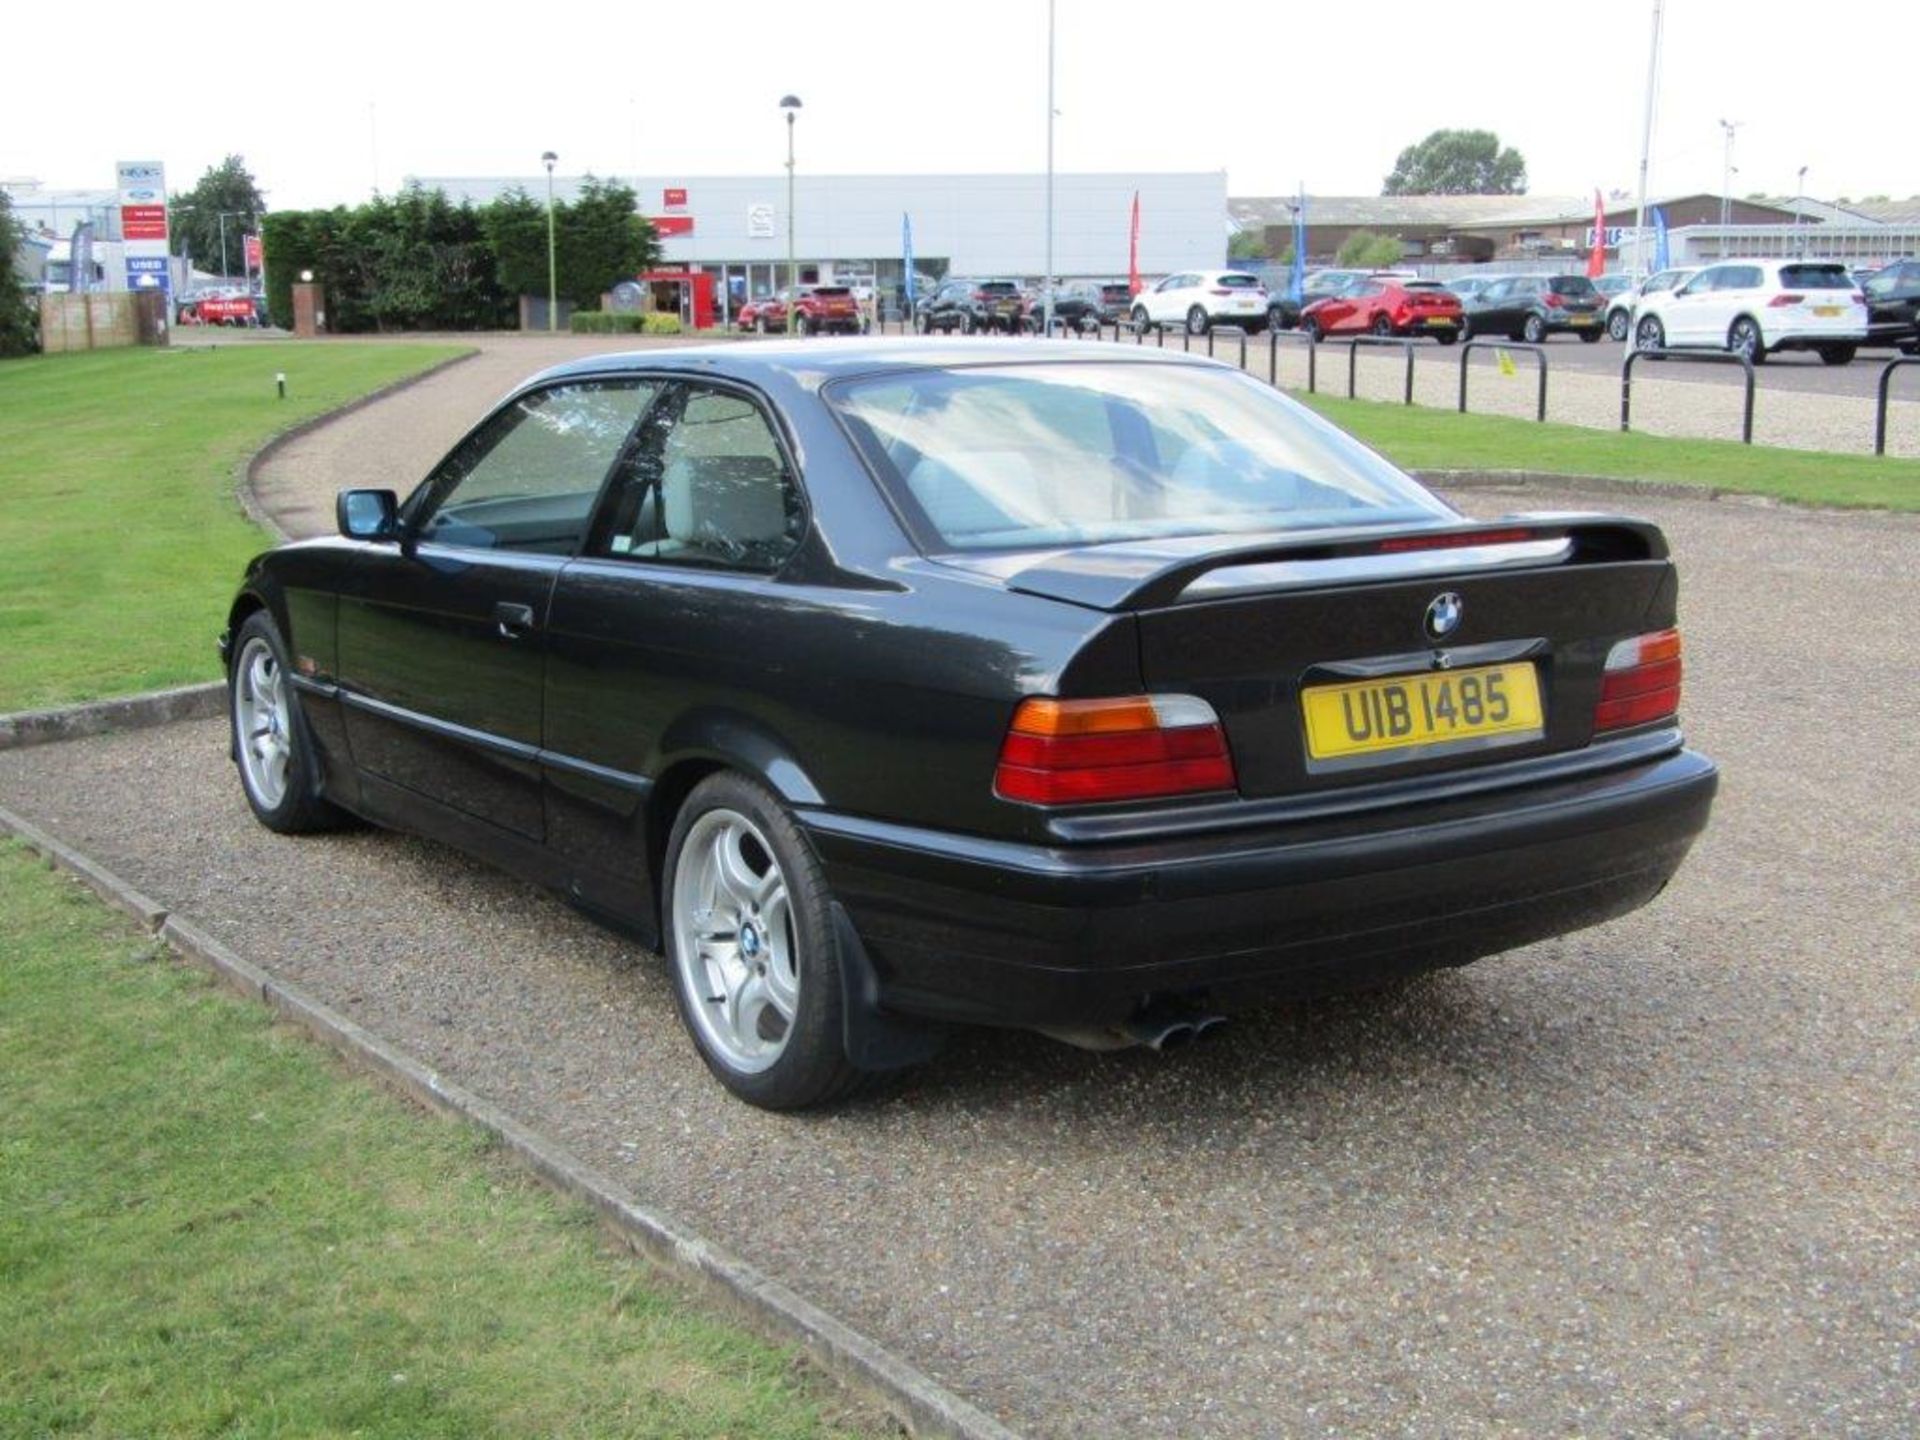 1993 BMW E36 325i Coupe - Image 3 of 20